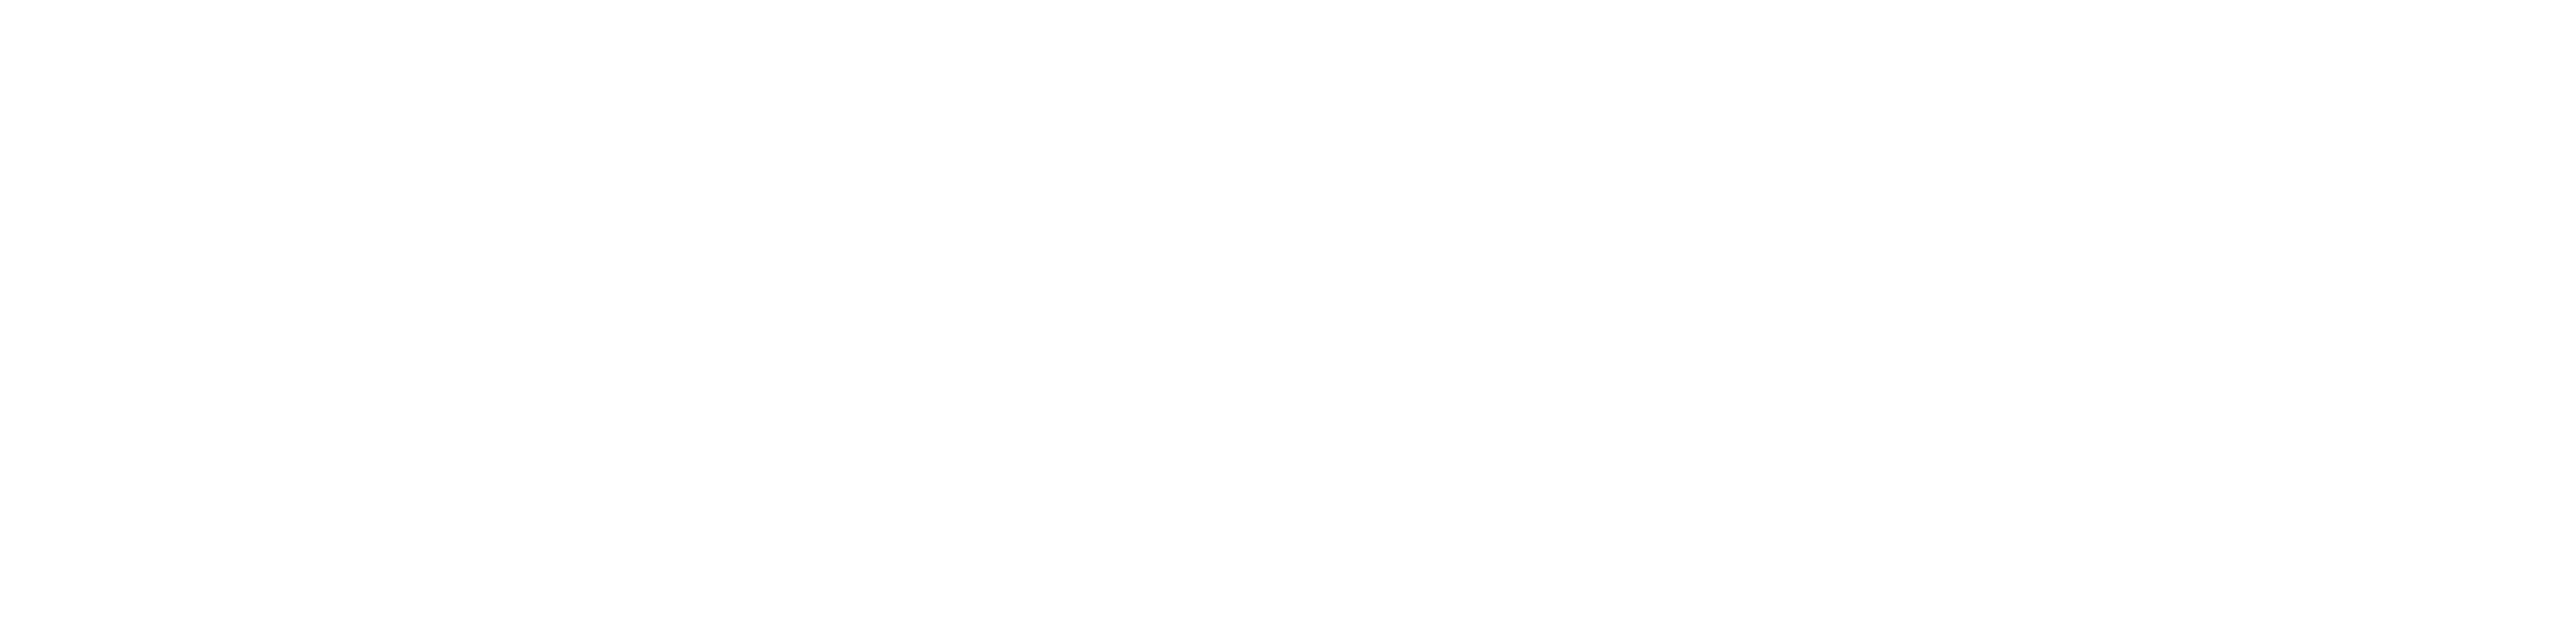 name-logo